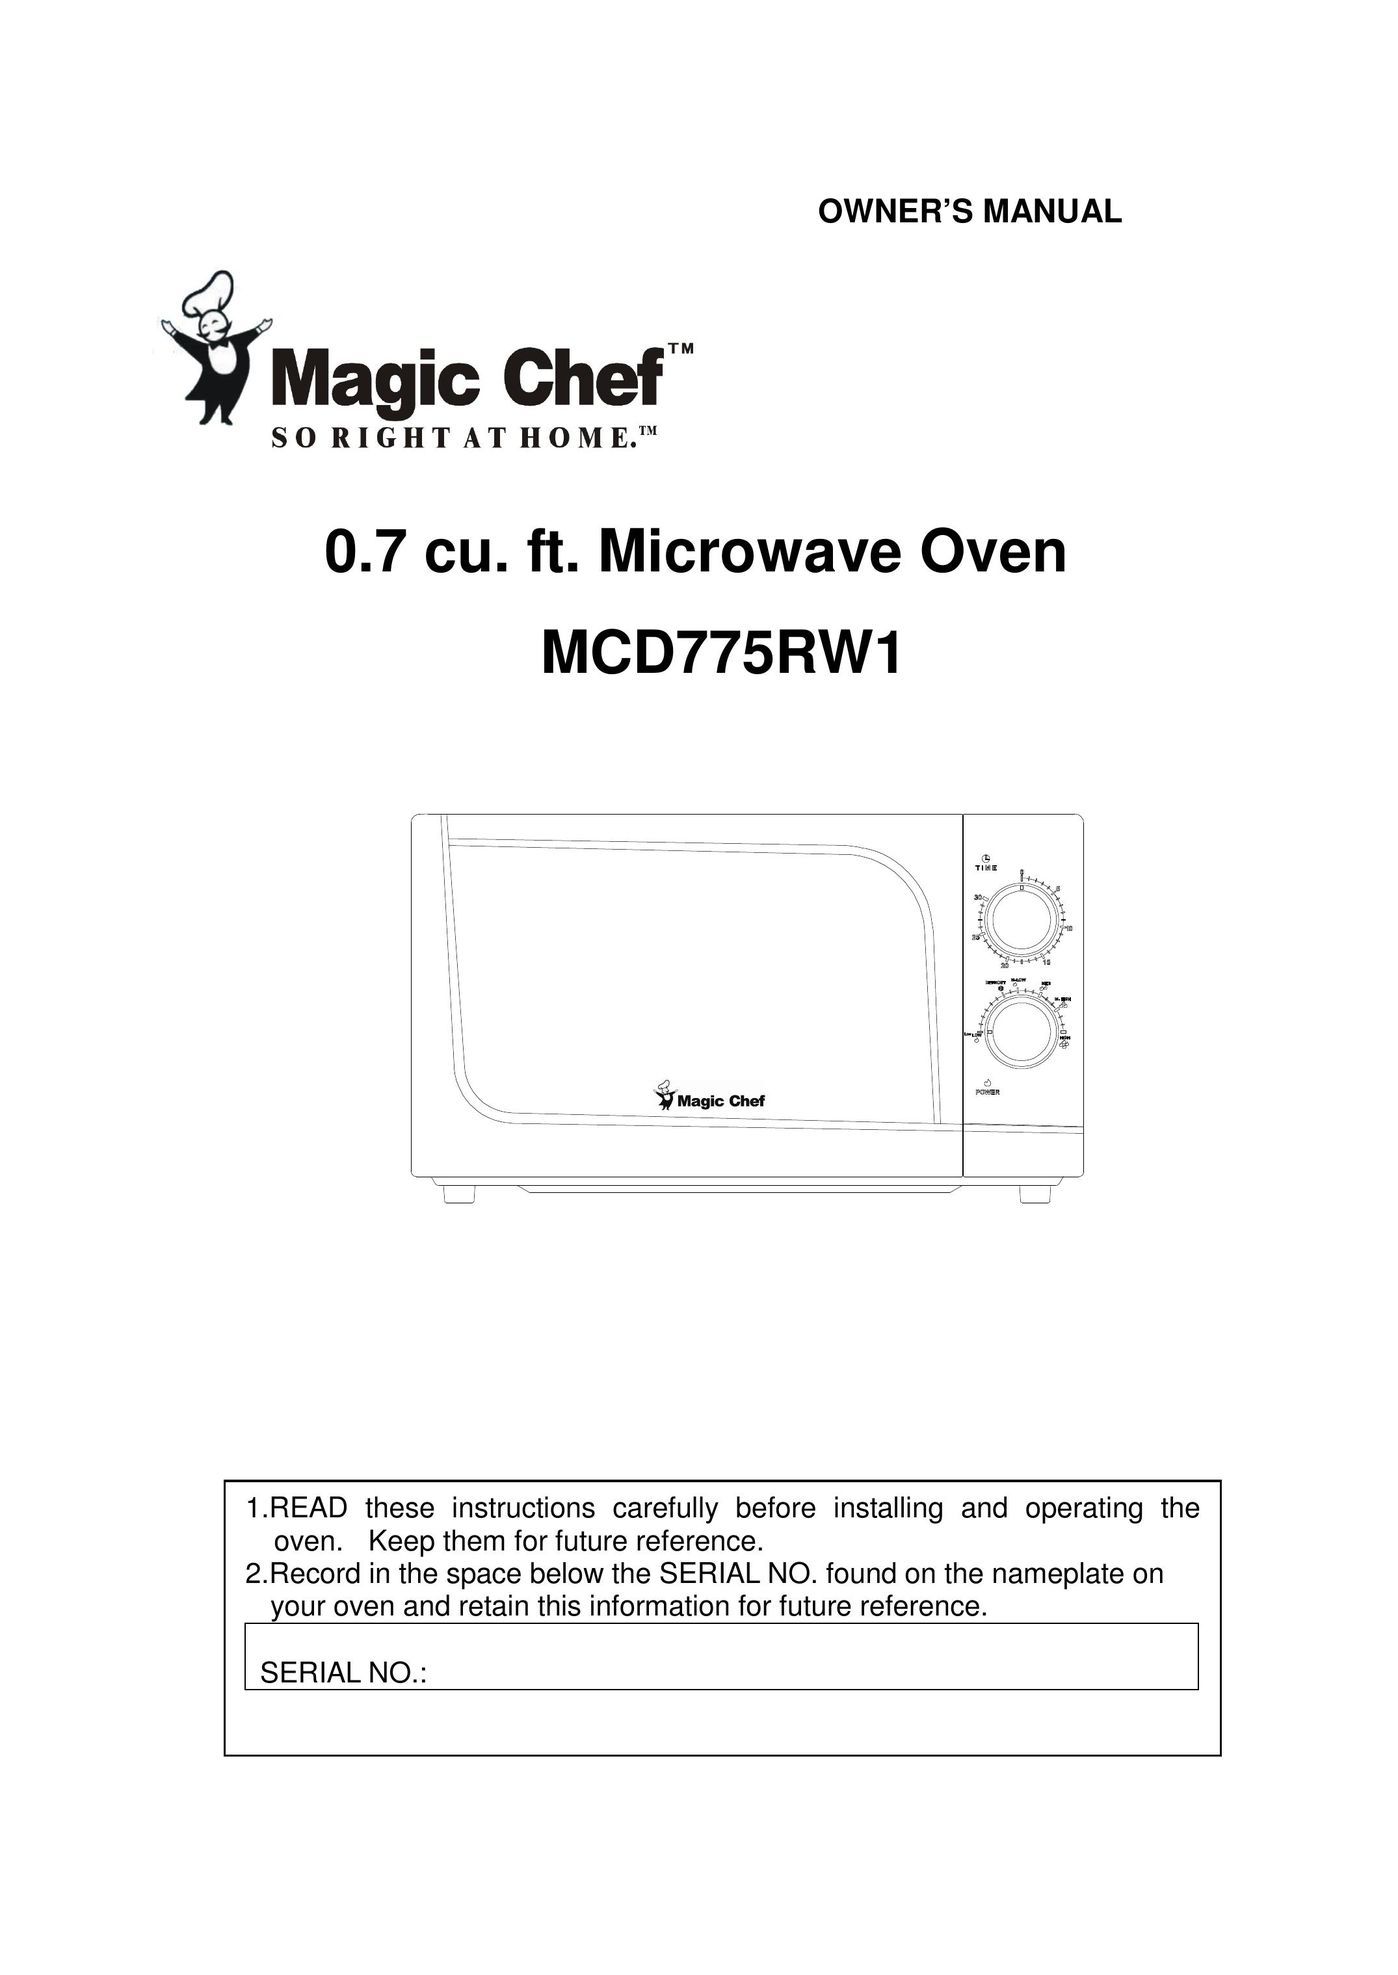 Magic Chef MCD775RW1 Microwave Oven User Manual